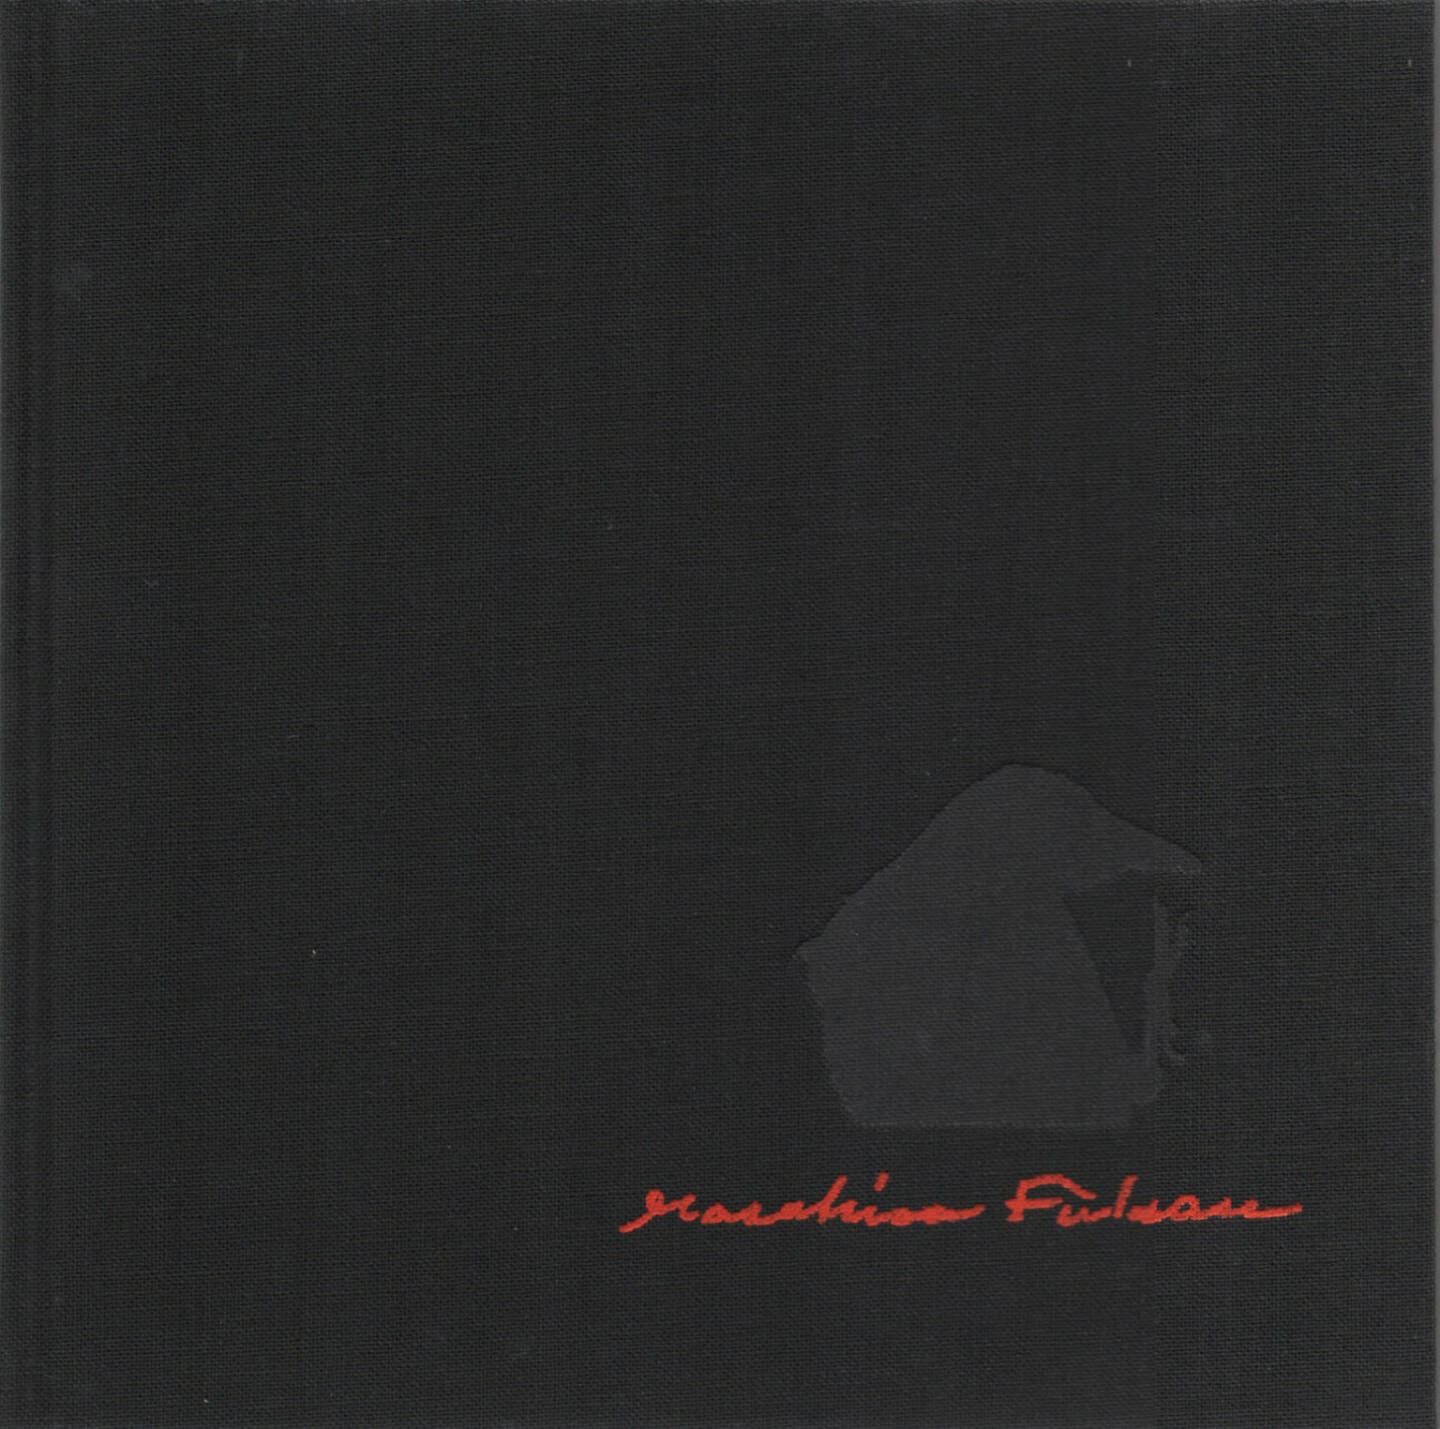 Masahisa Fukase - The Solitude of Ravens (Rathole edition) - 300-400 Euro, http://josefchladek.com/book/masahisa_fukase_-_karasu_the_solitude_of_ravens